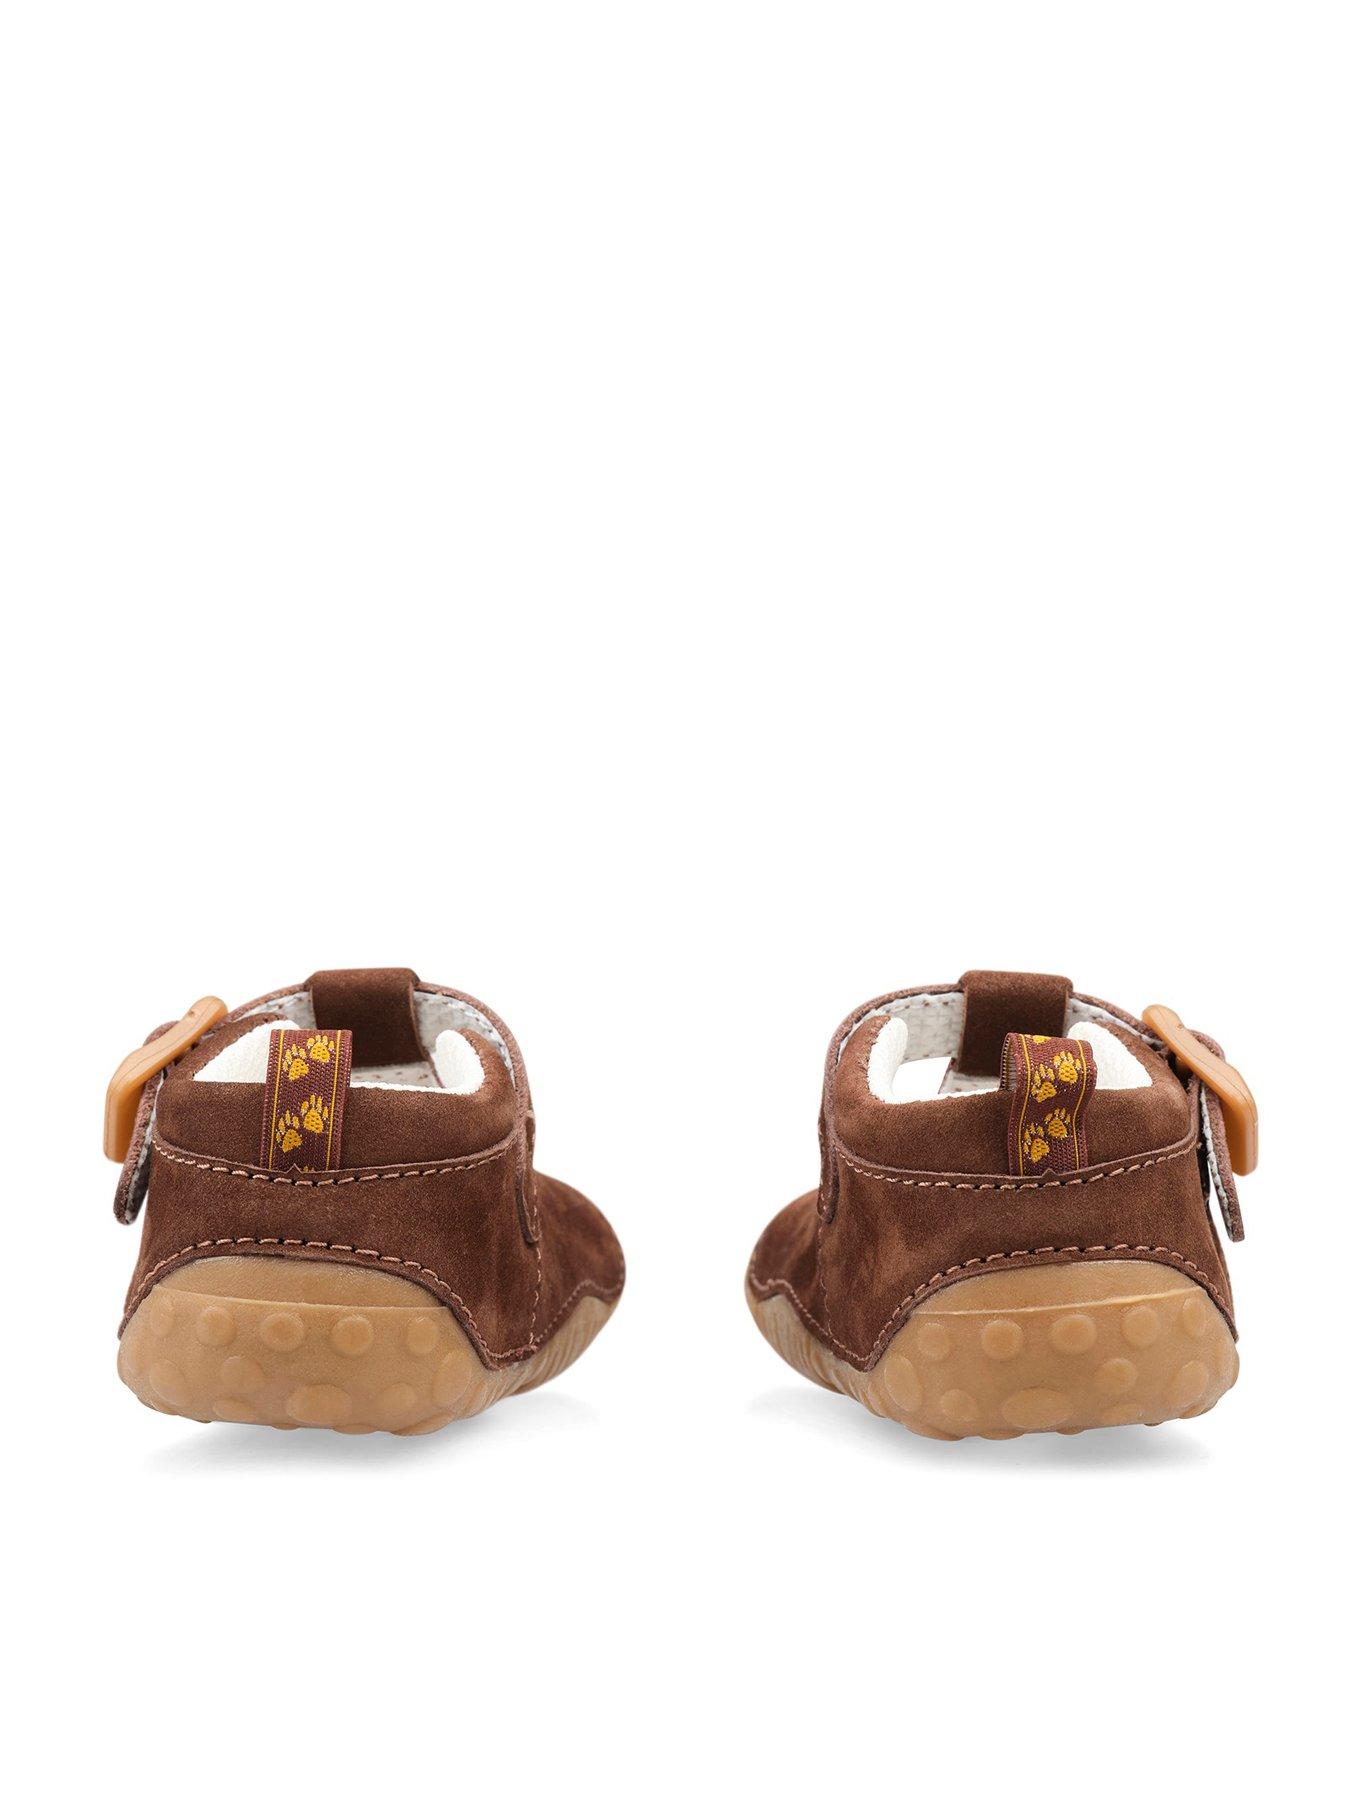 Shoes & boots Cuddle Pre-Walker Shoes - Brown